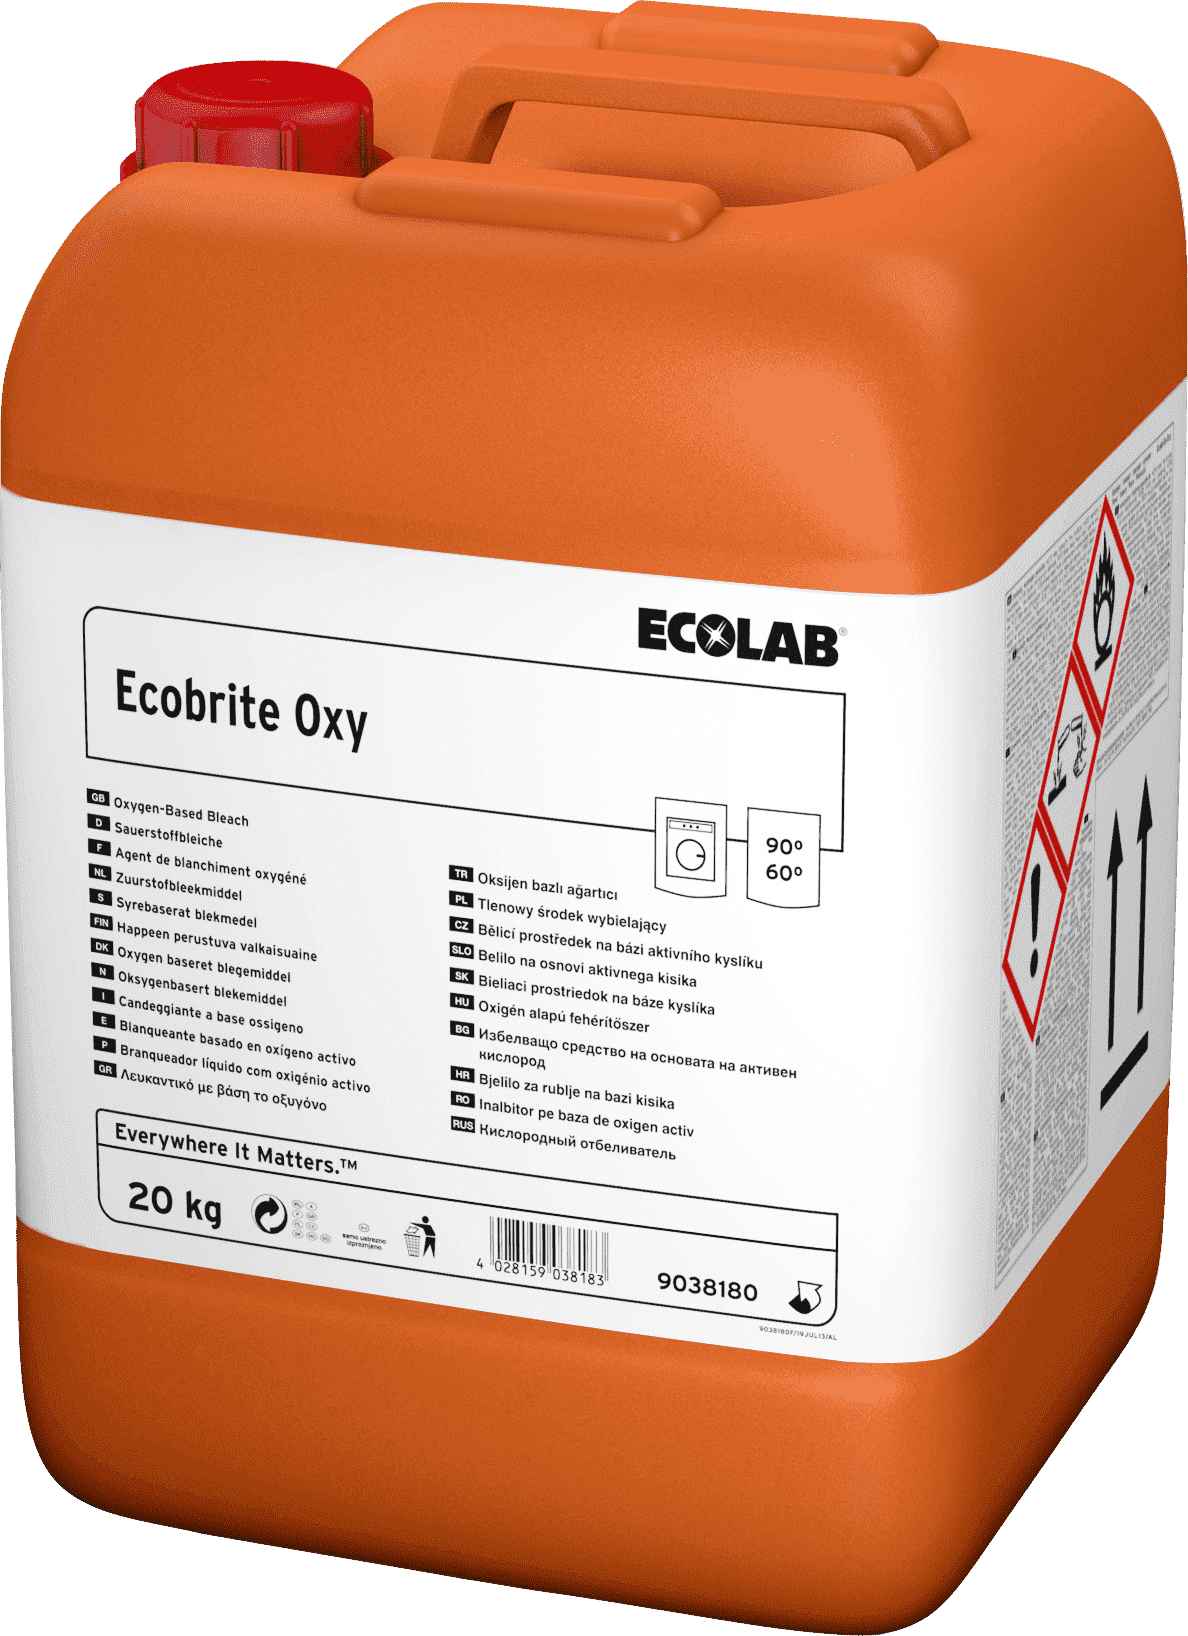 Ecolab Ecobrite Oxy кислородный отбеливатель, Клингард 0